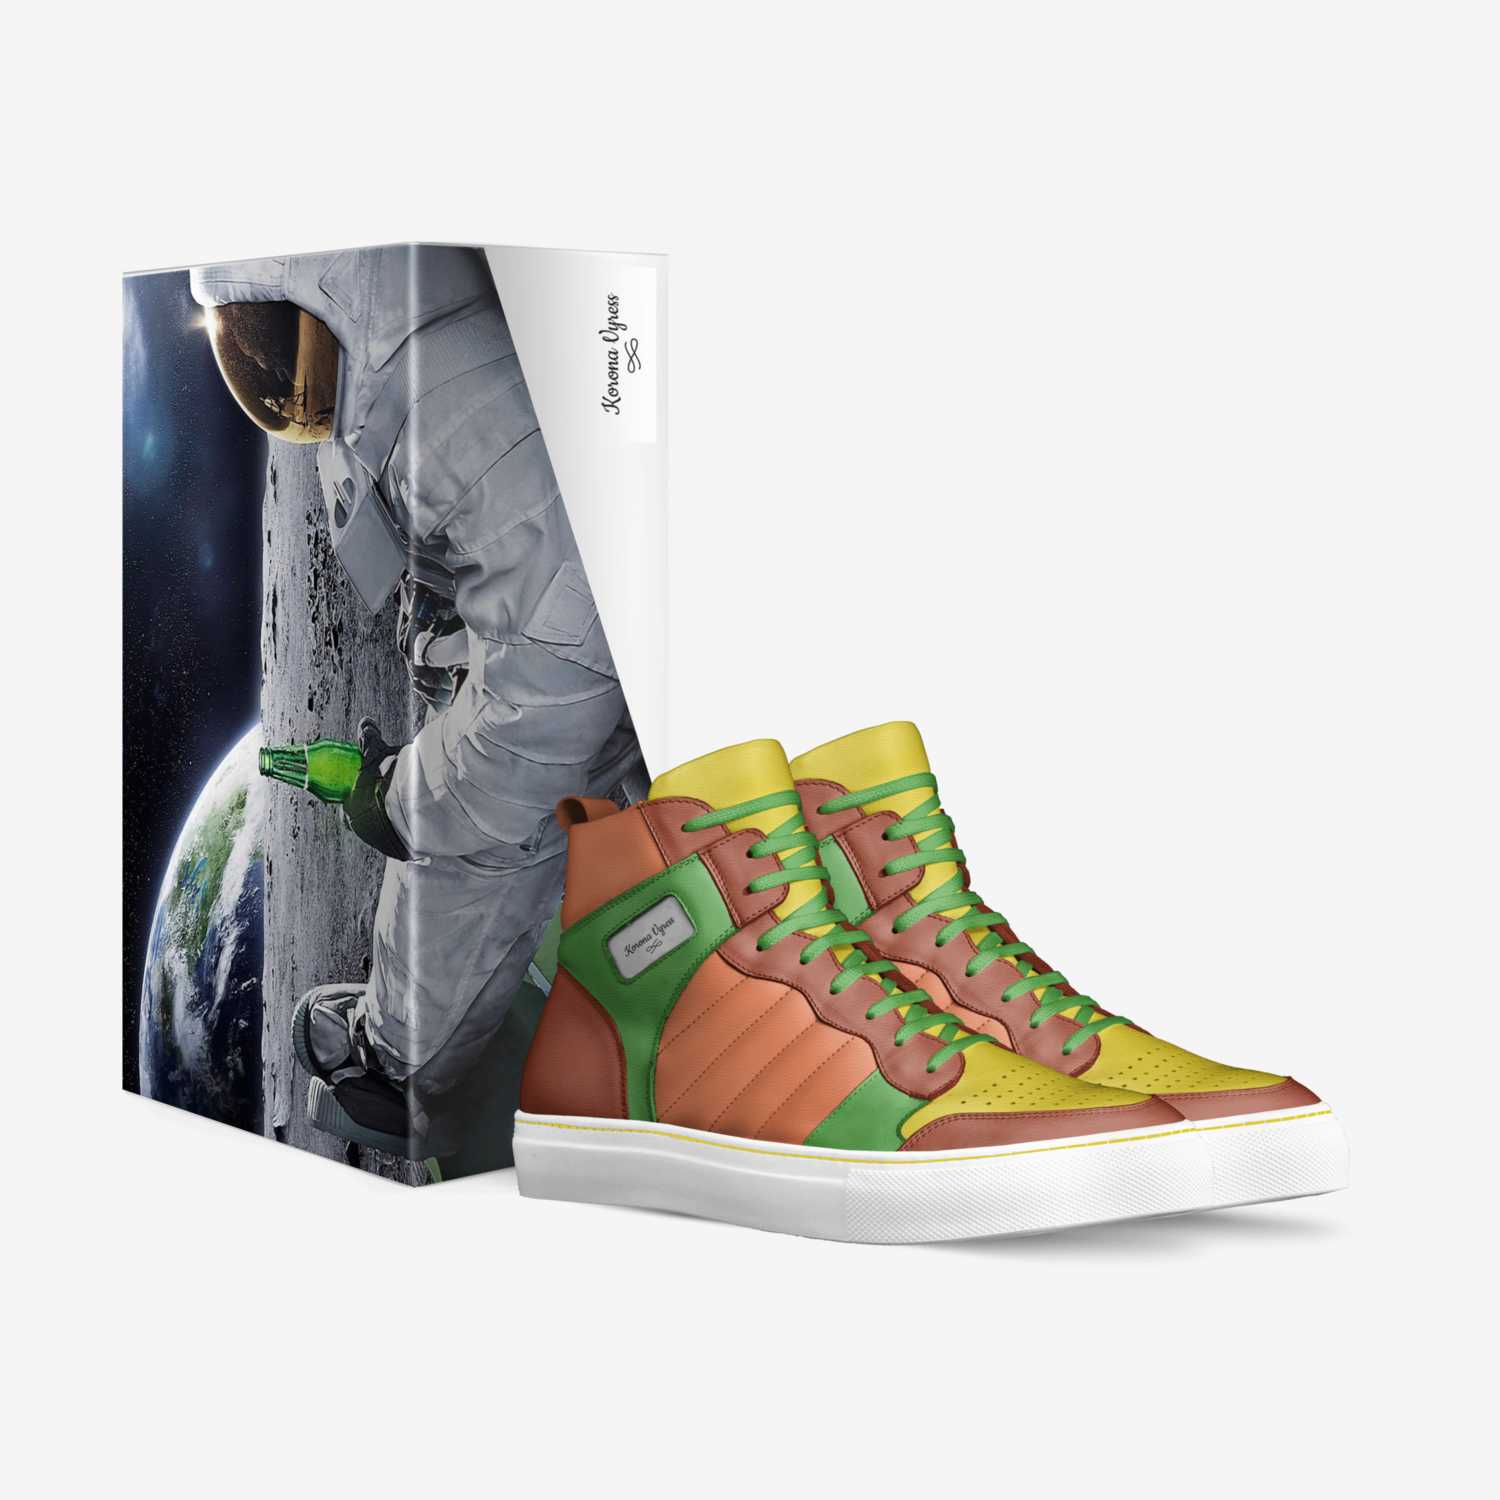 Korona Vyress custom made in Italy shoes by Don Preston | Box view